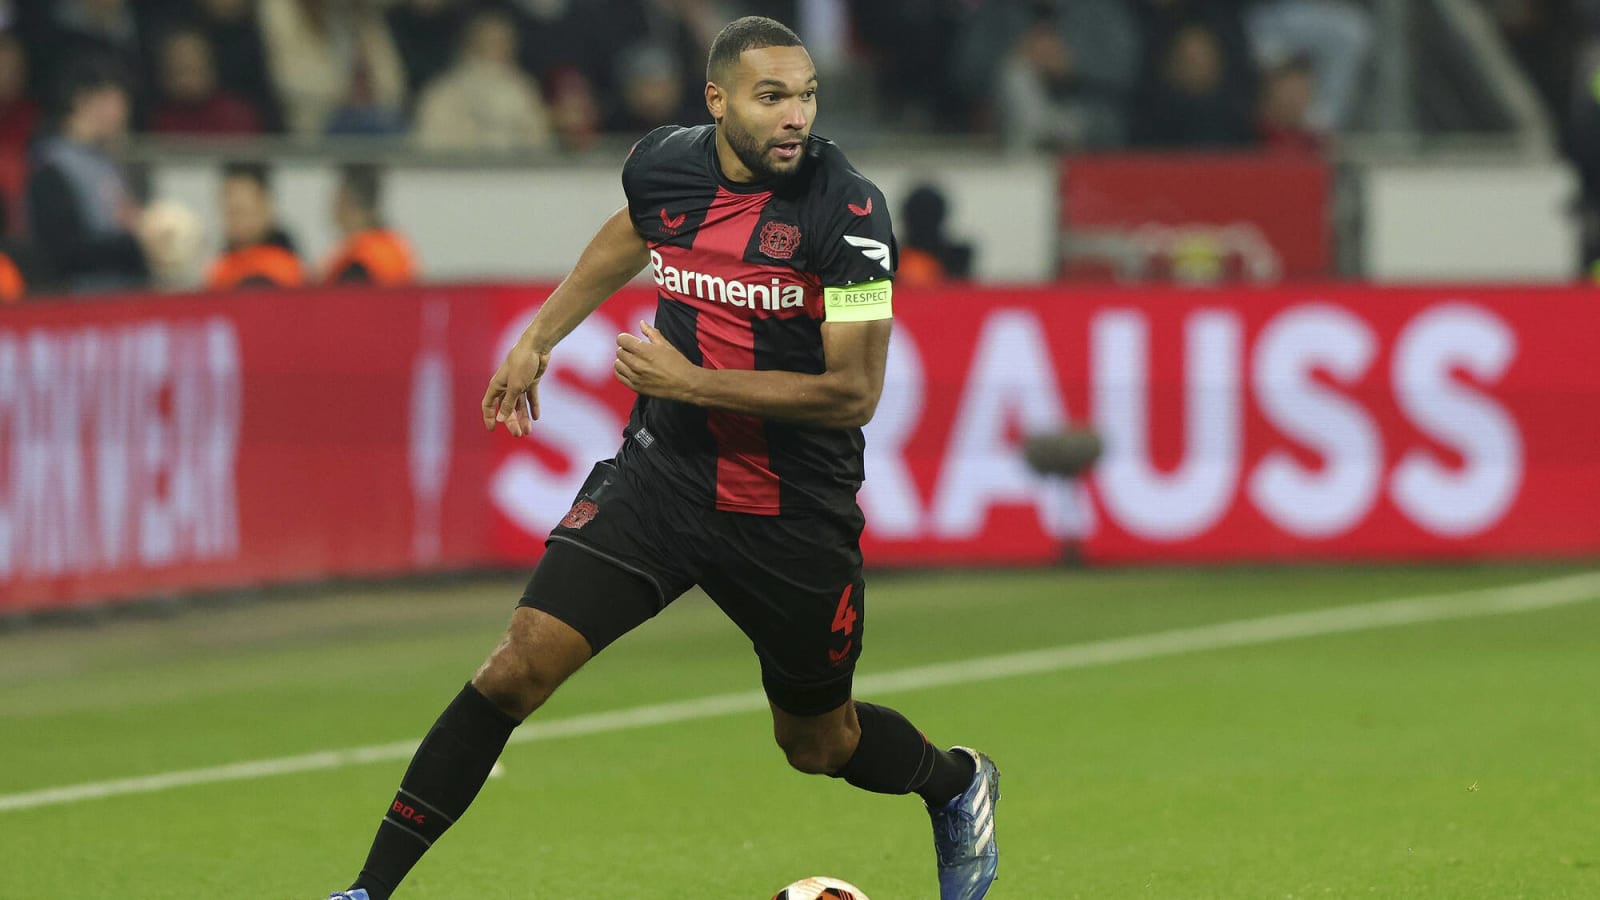 Liverpool have kept close watch on Bundesliga pass master; Romano said he’s ‘doing great’ – report